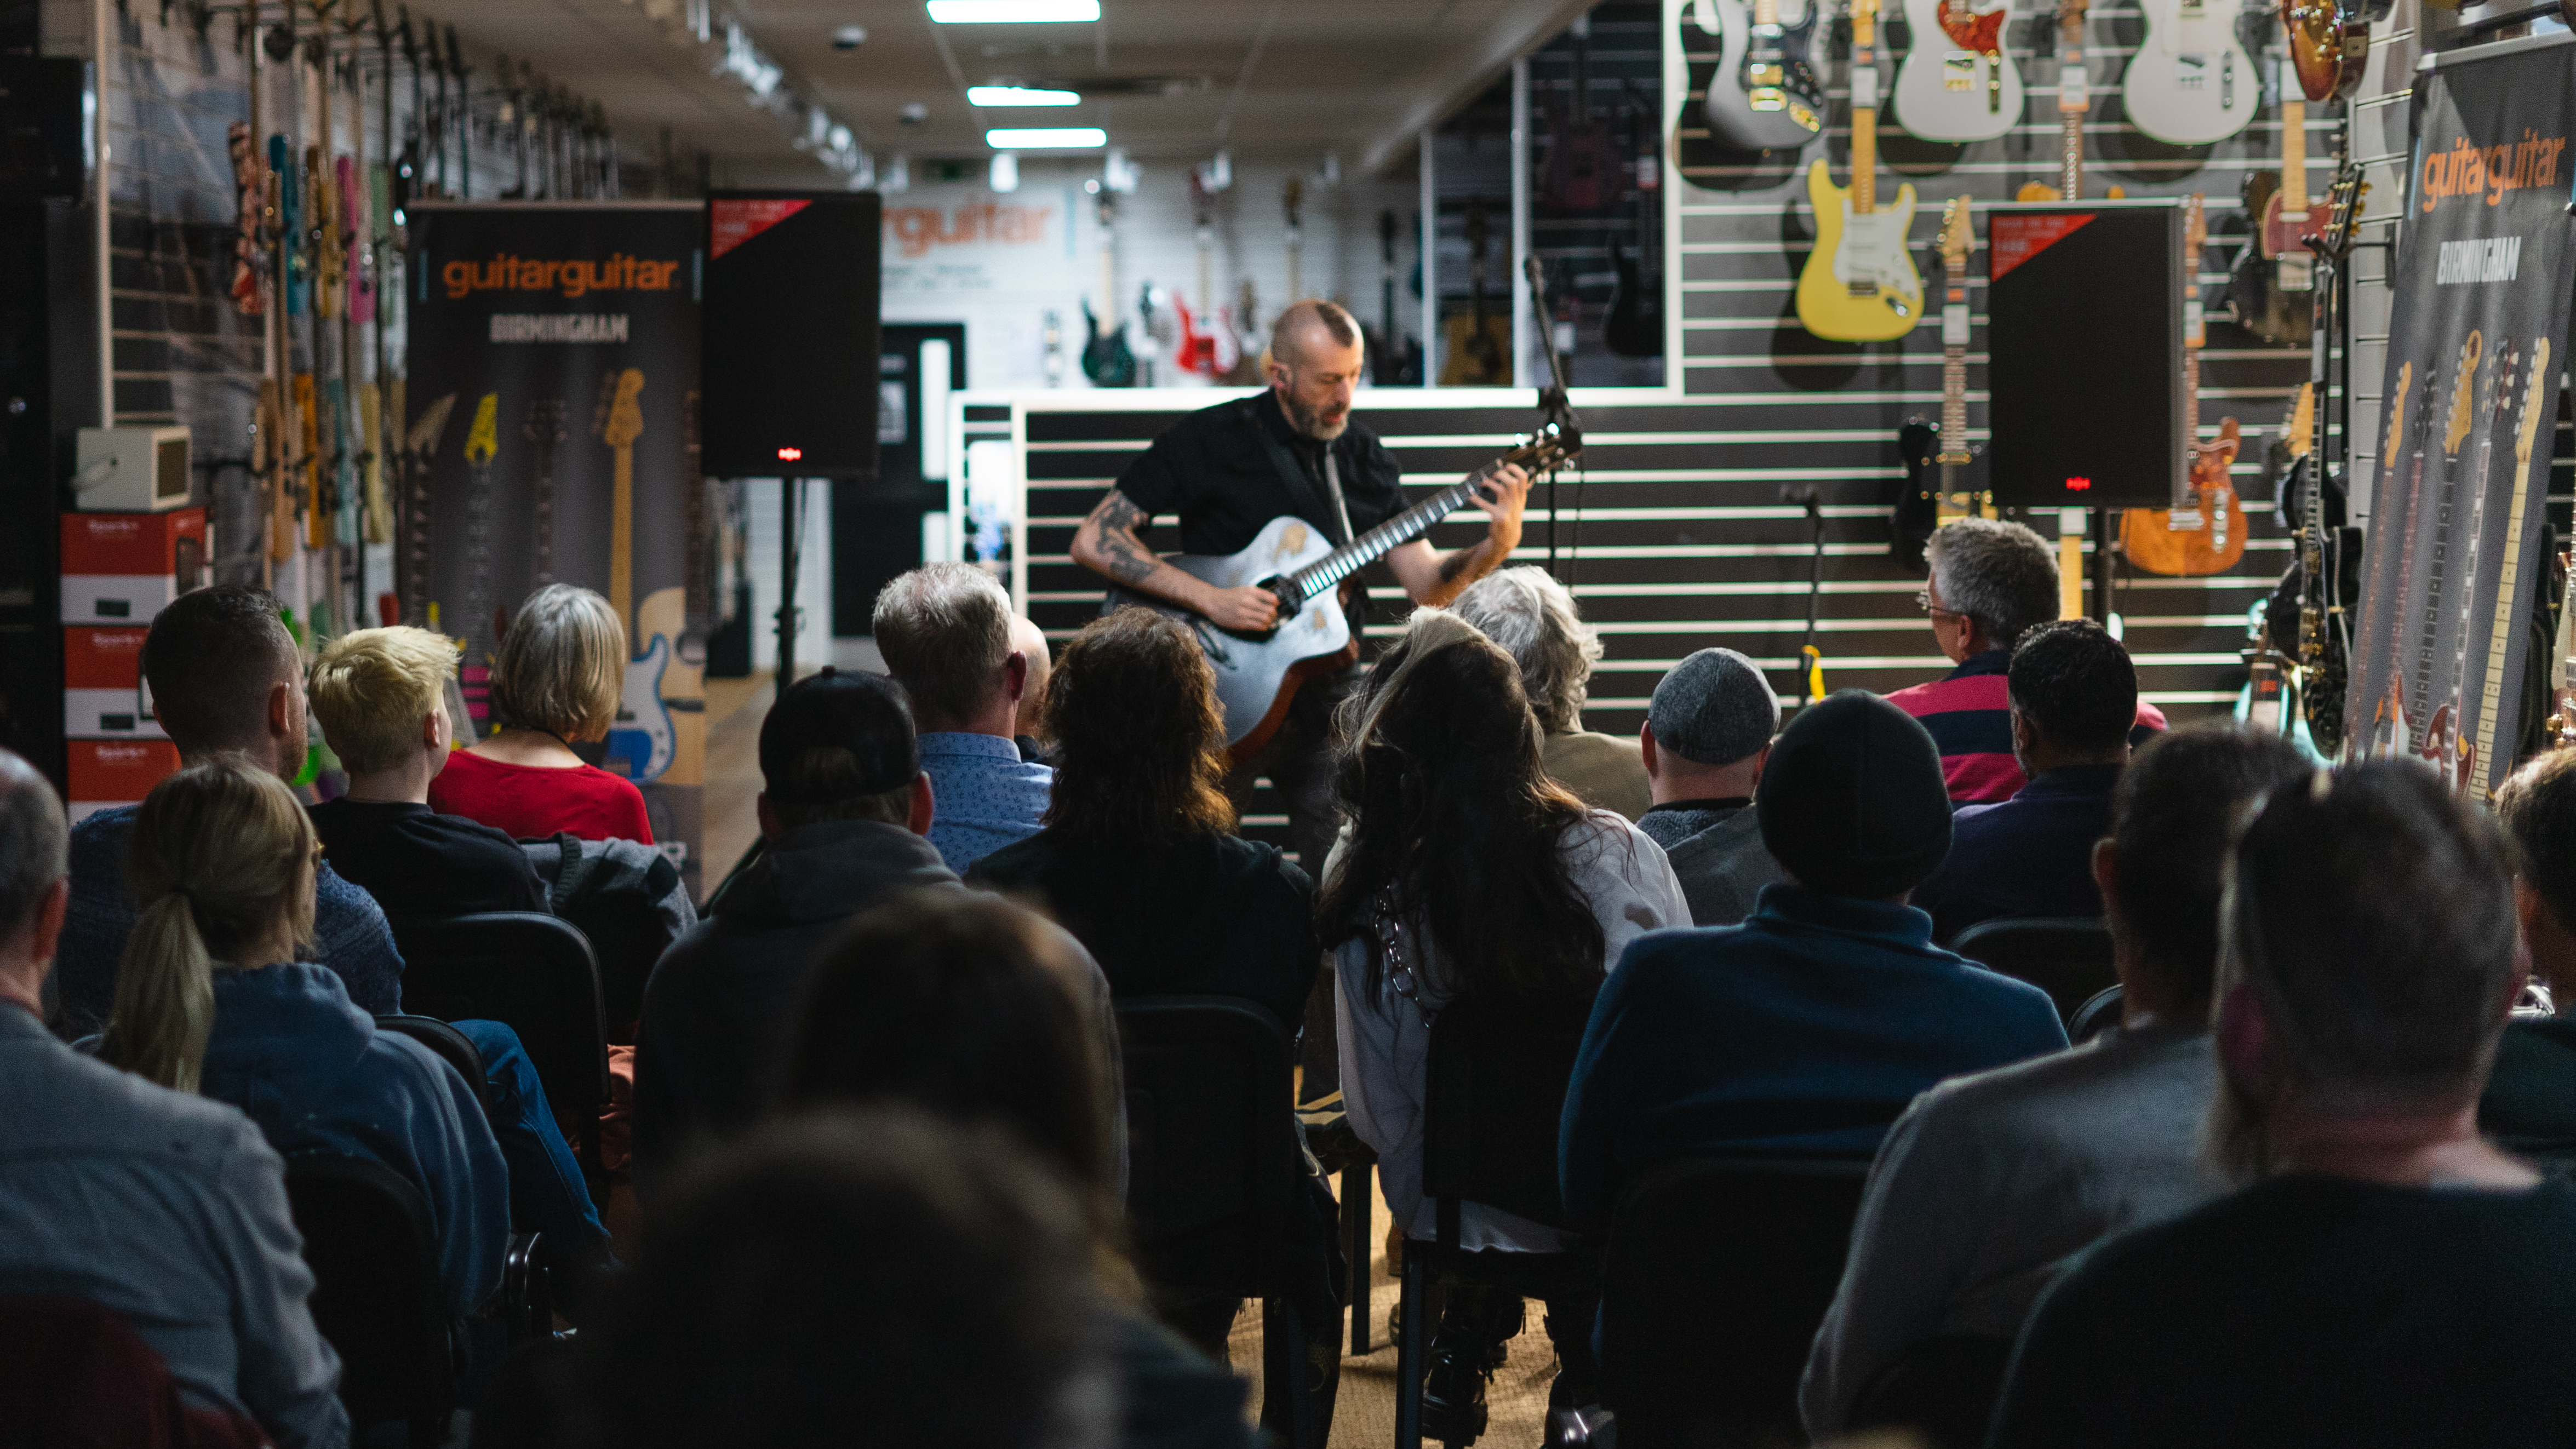 Jon Gomm performing at a guitarguitar store